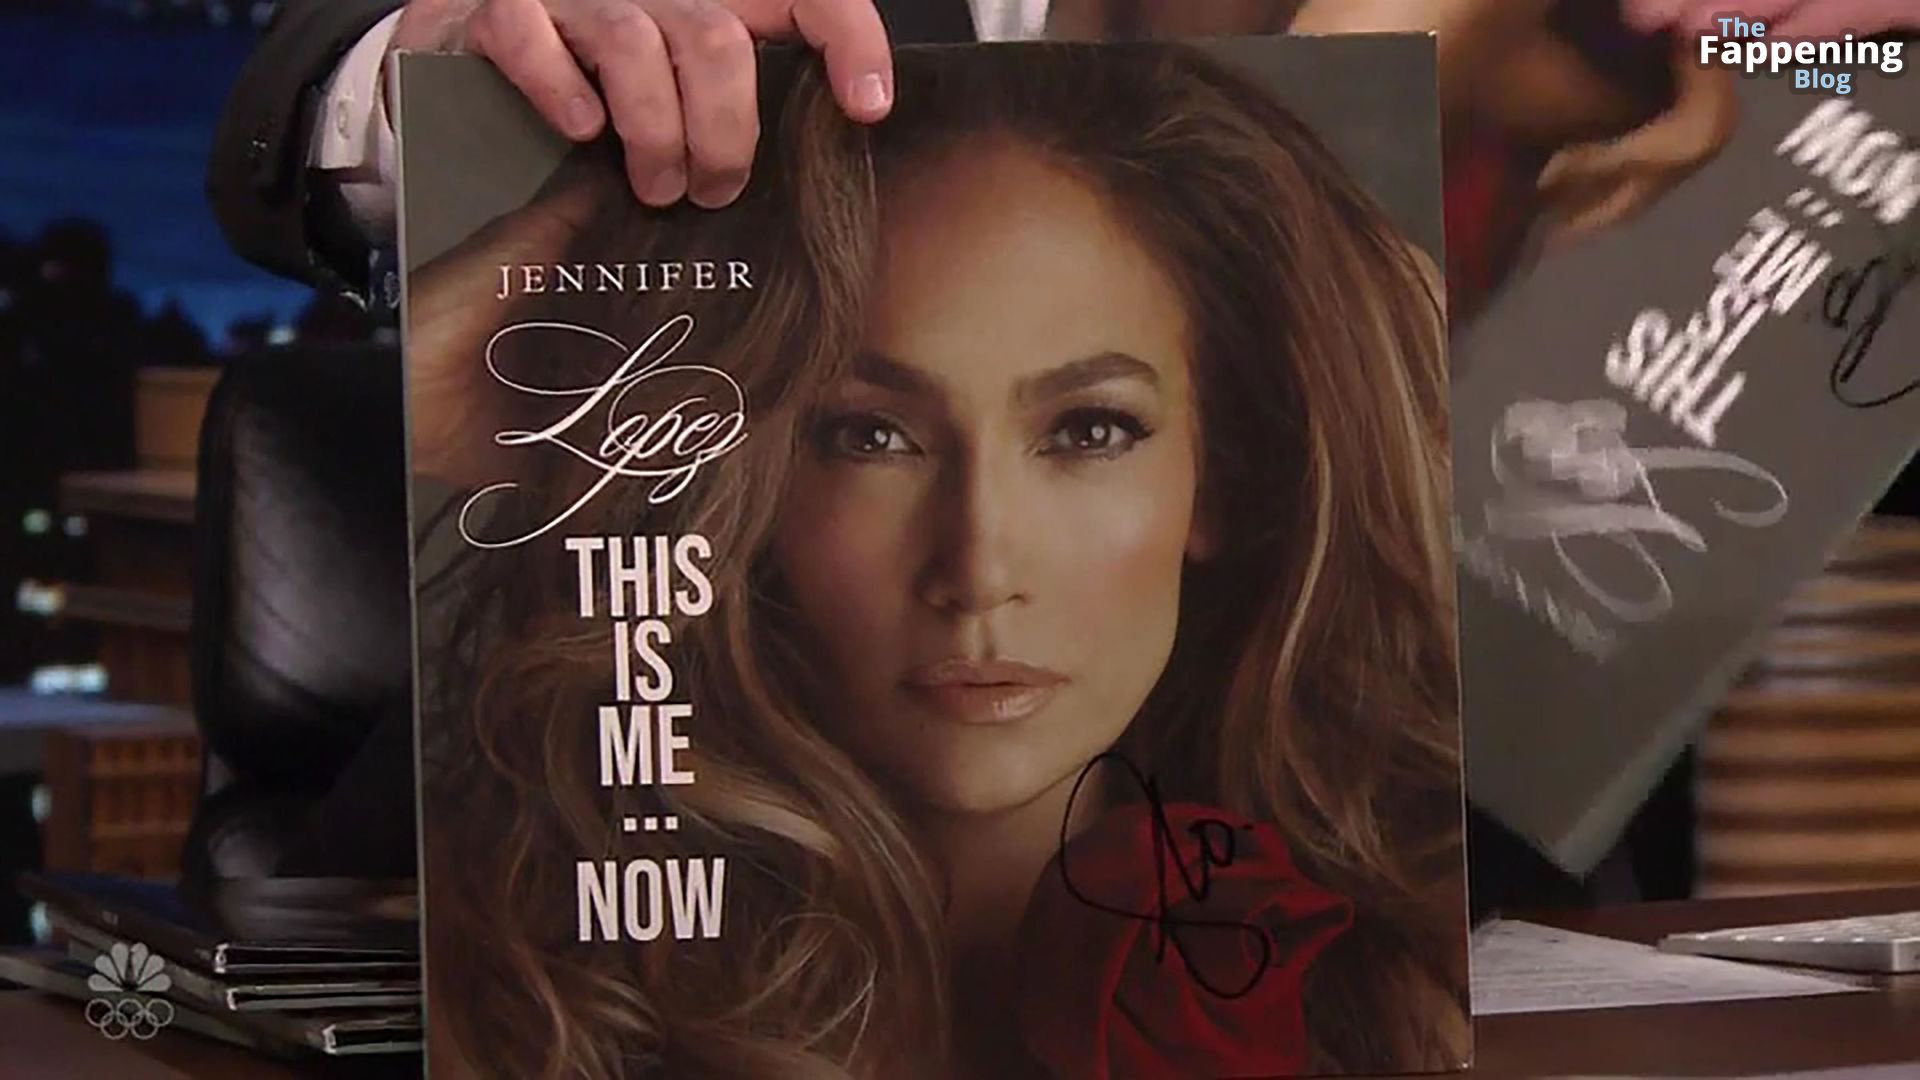 Jennifer-Lopez-Sexy-73-The-Fappening-Blog-1.jpg